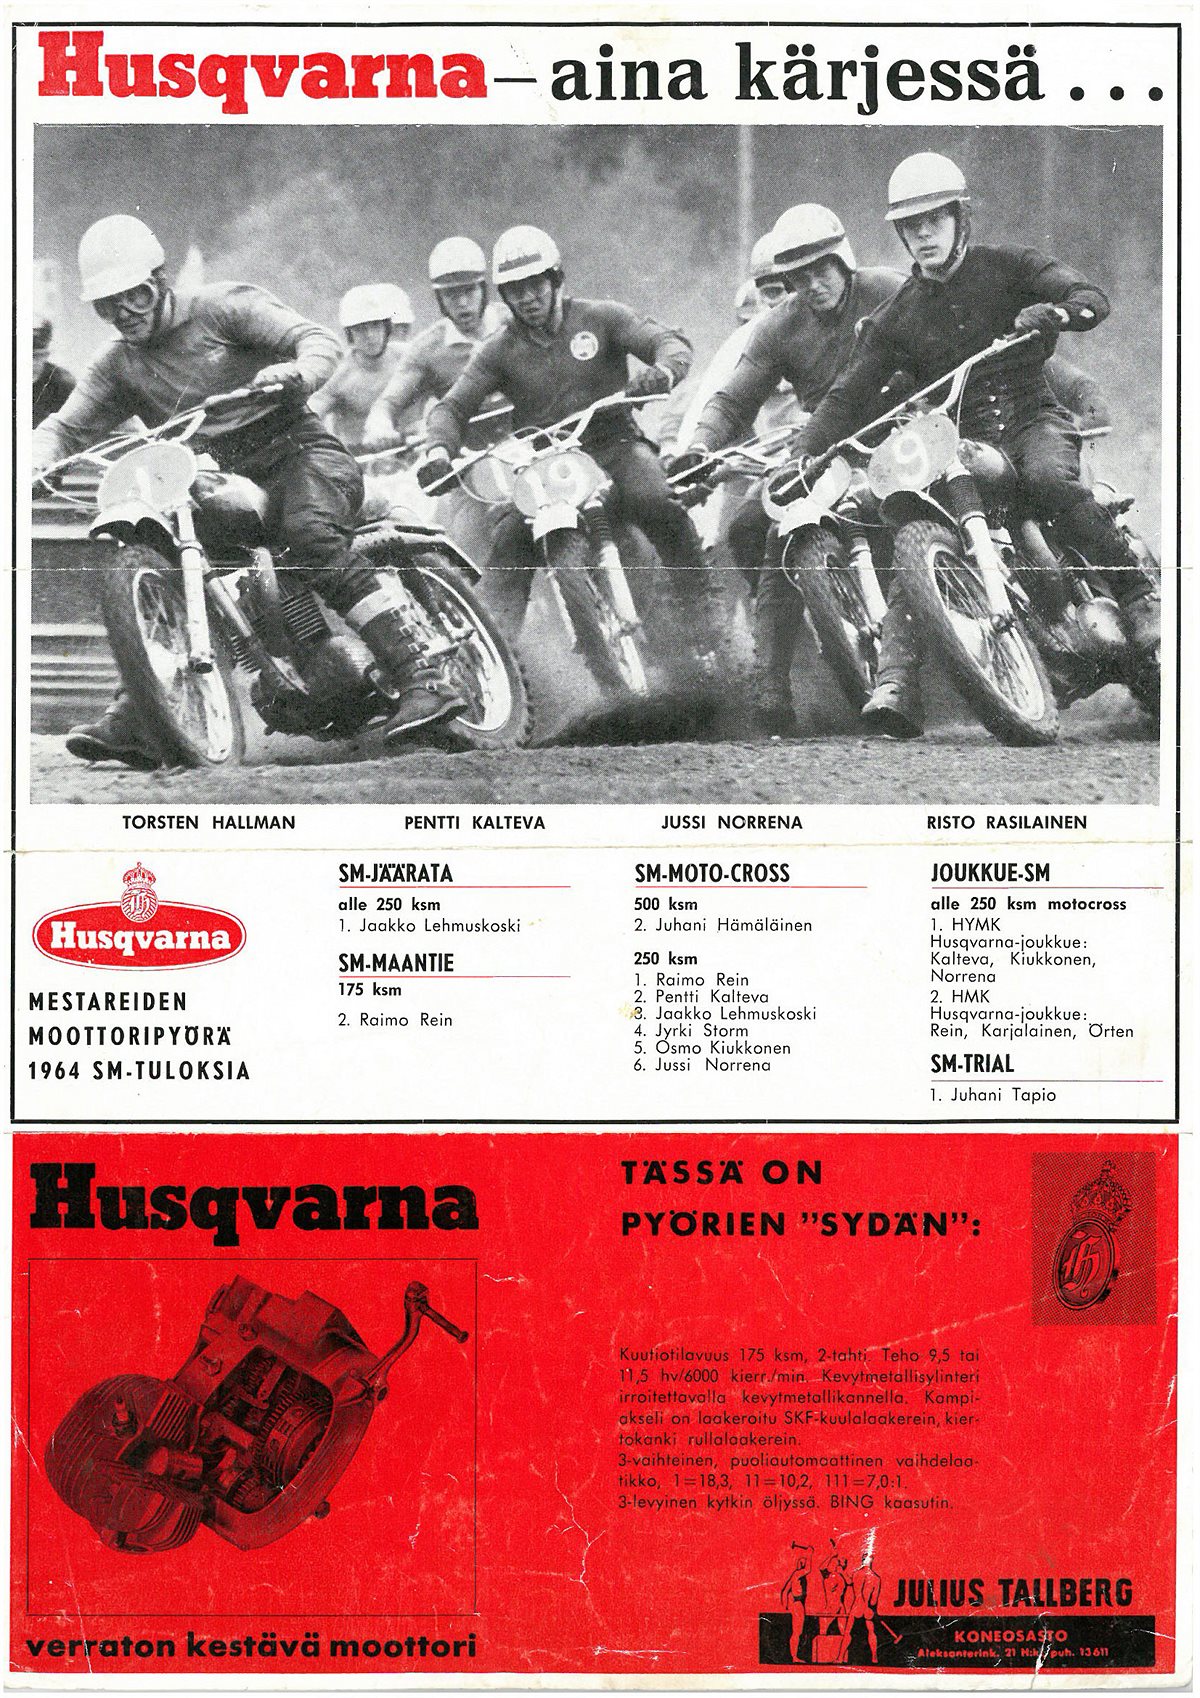 1965 Husqvarna Ad